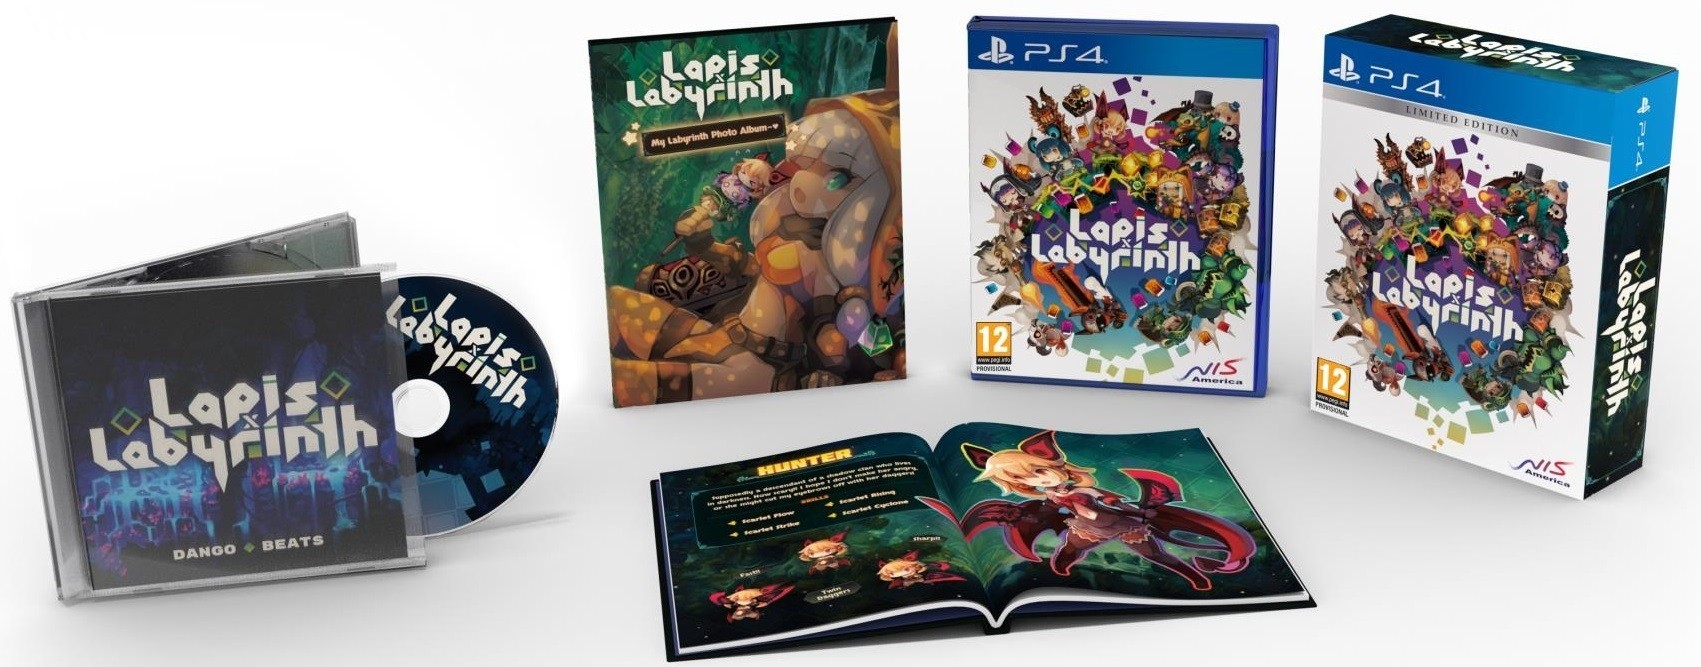 Lapis x Labyrinth Limited Edition XL (PS4), Nippon Ichi Software